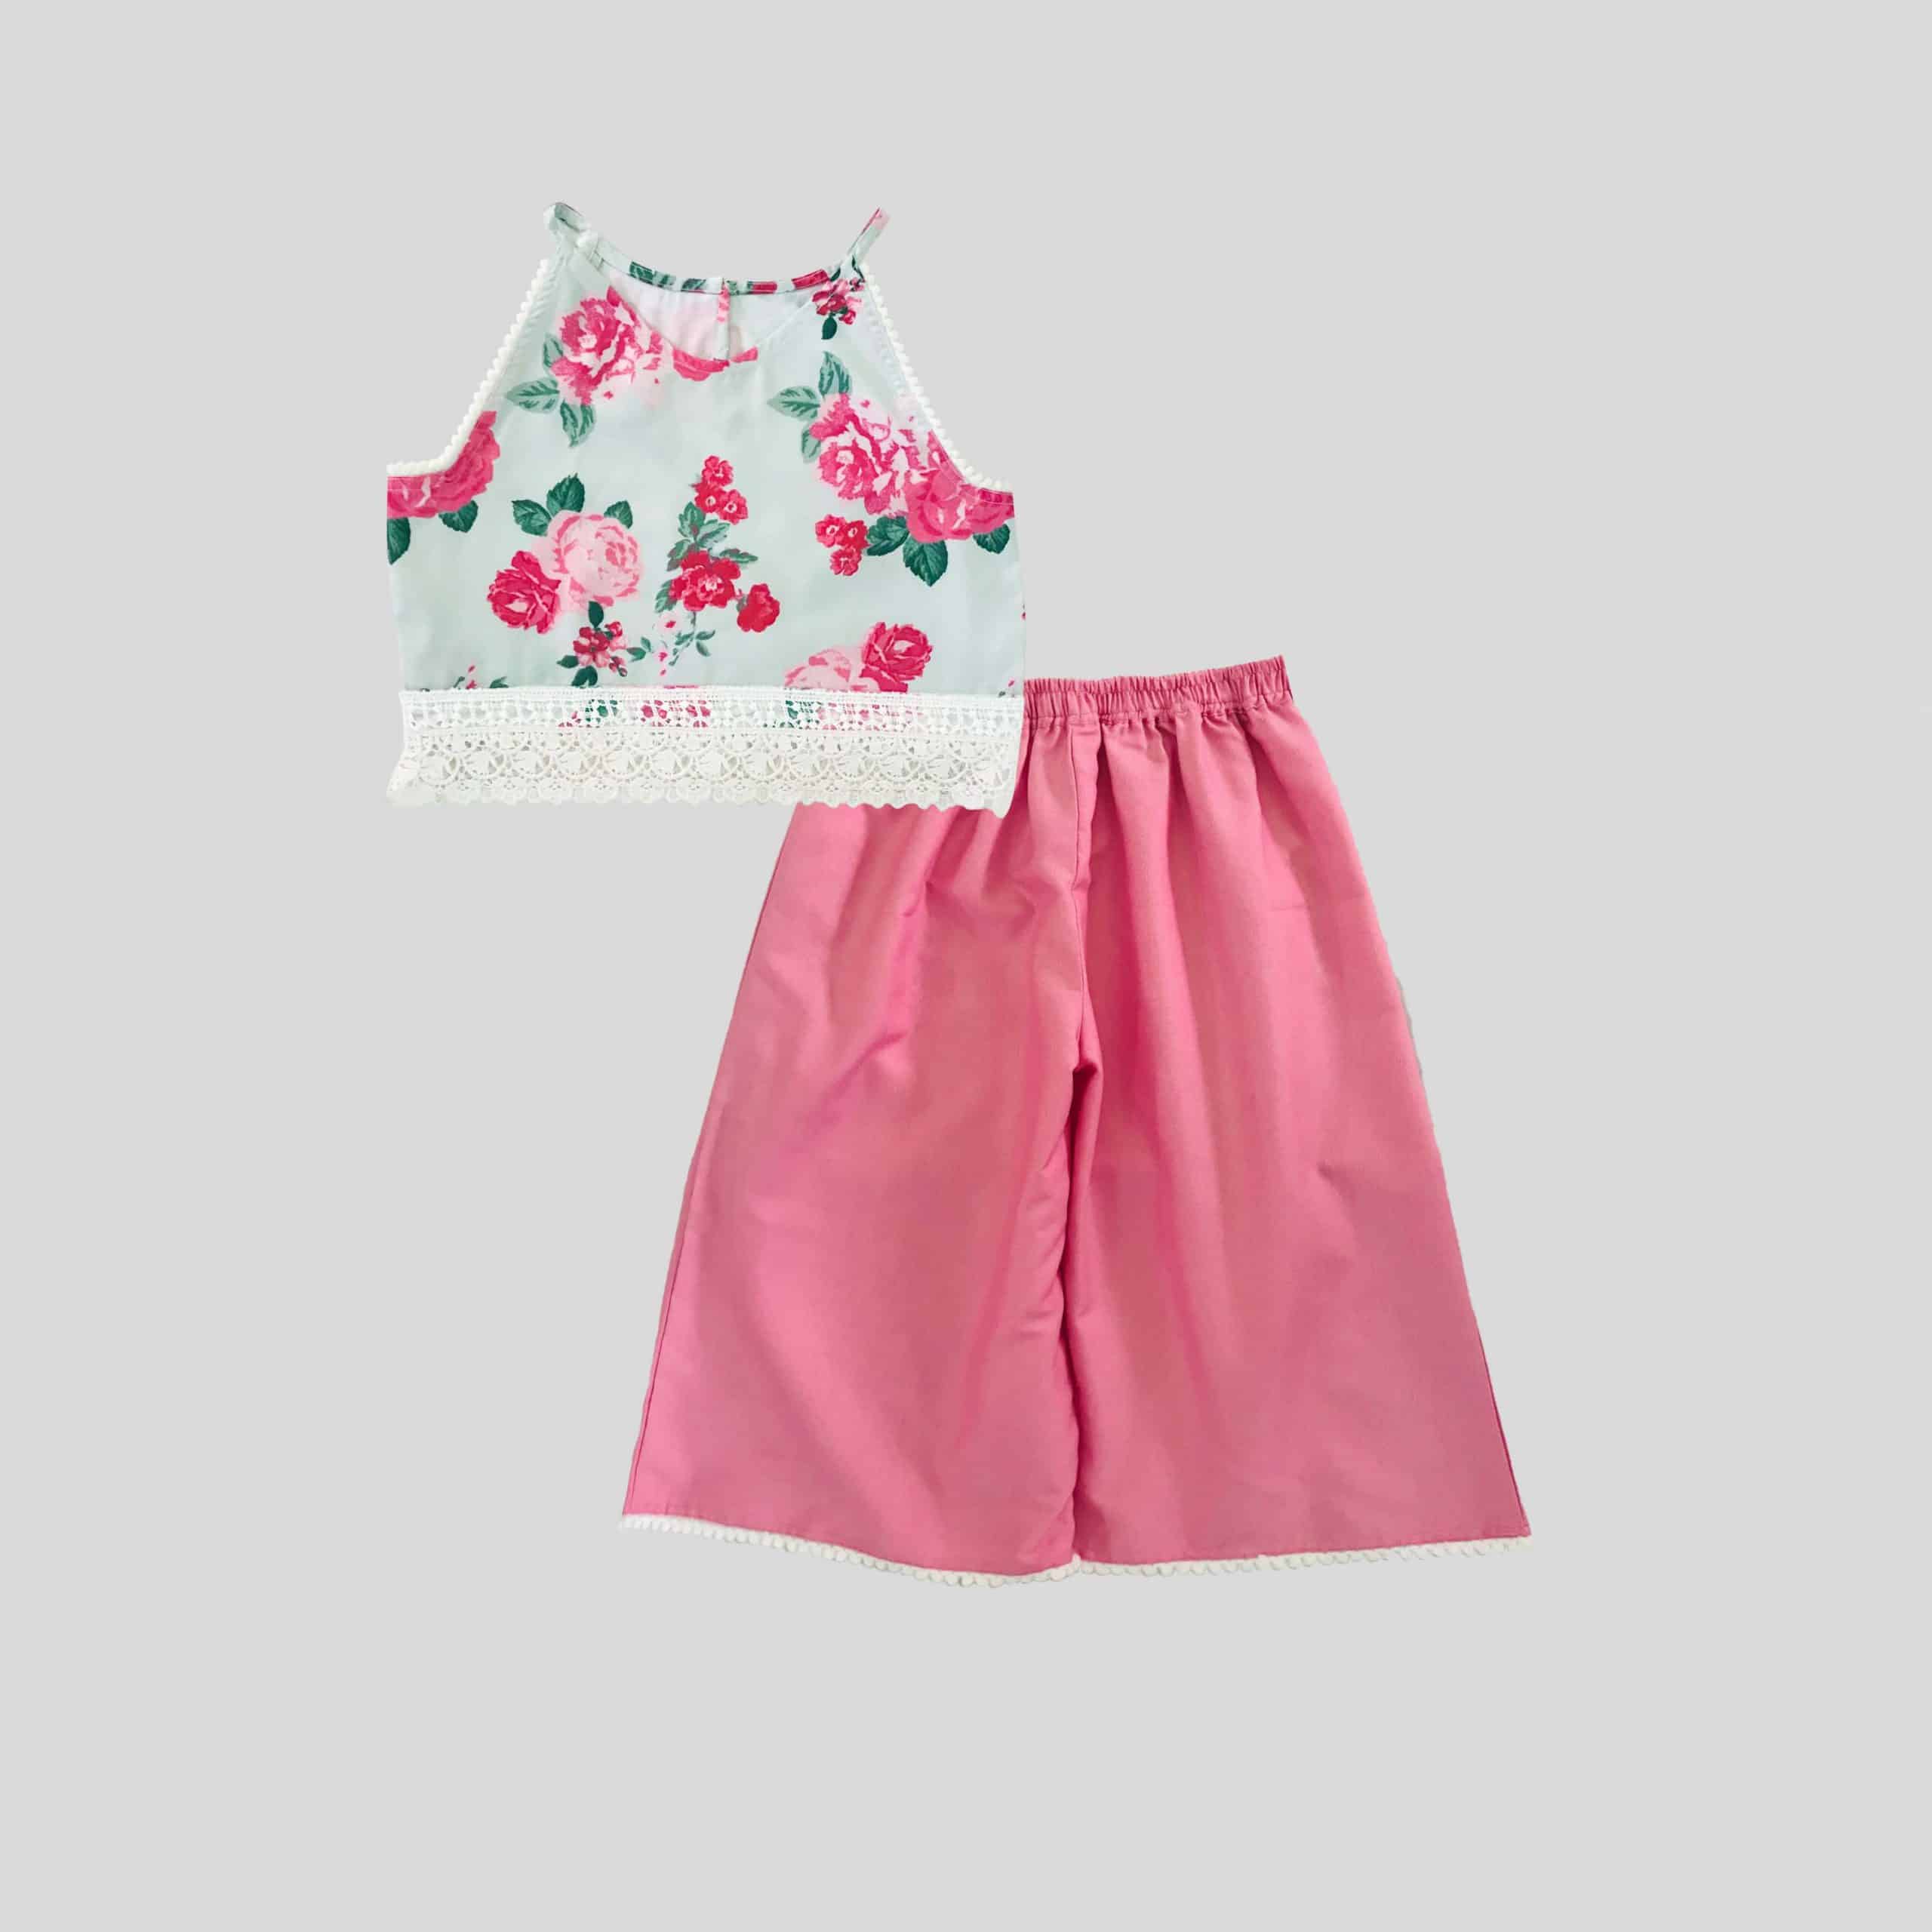 Rose print halter neck and lace trim top & pink pants set - RKFCW290